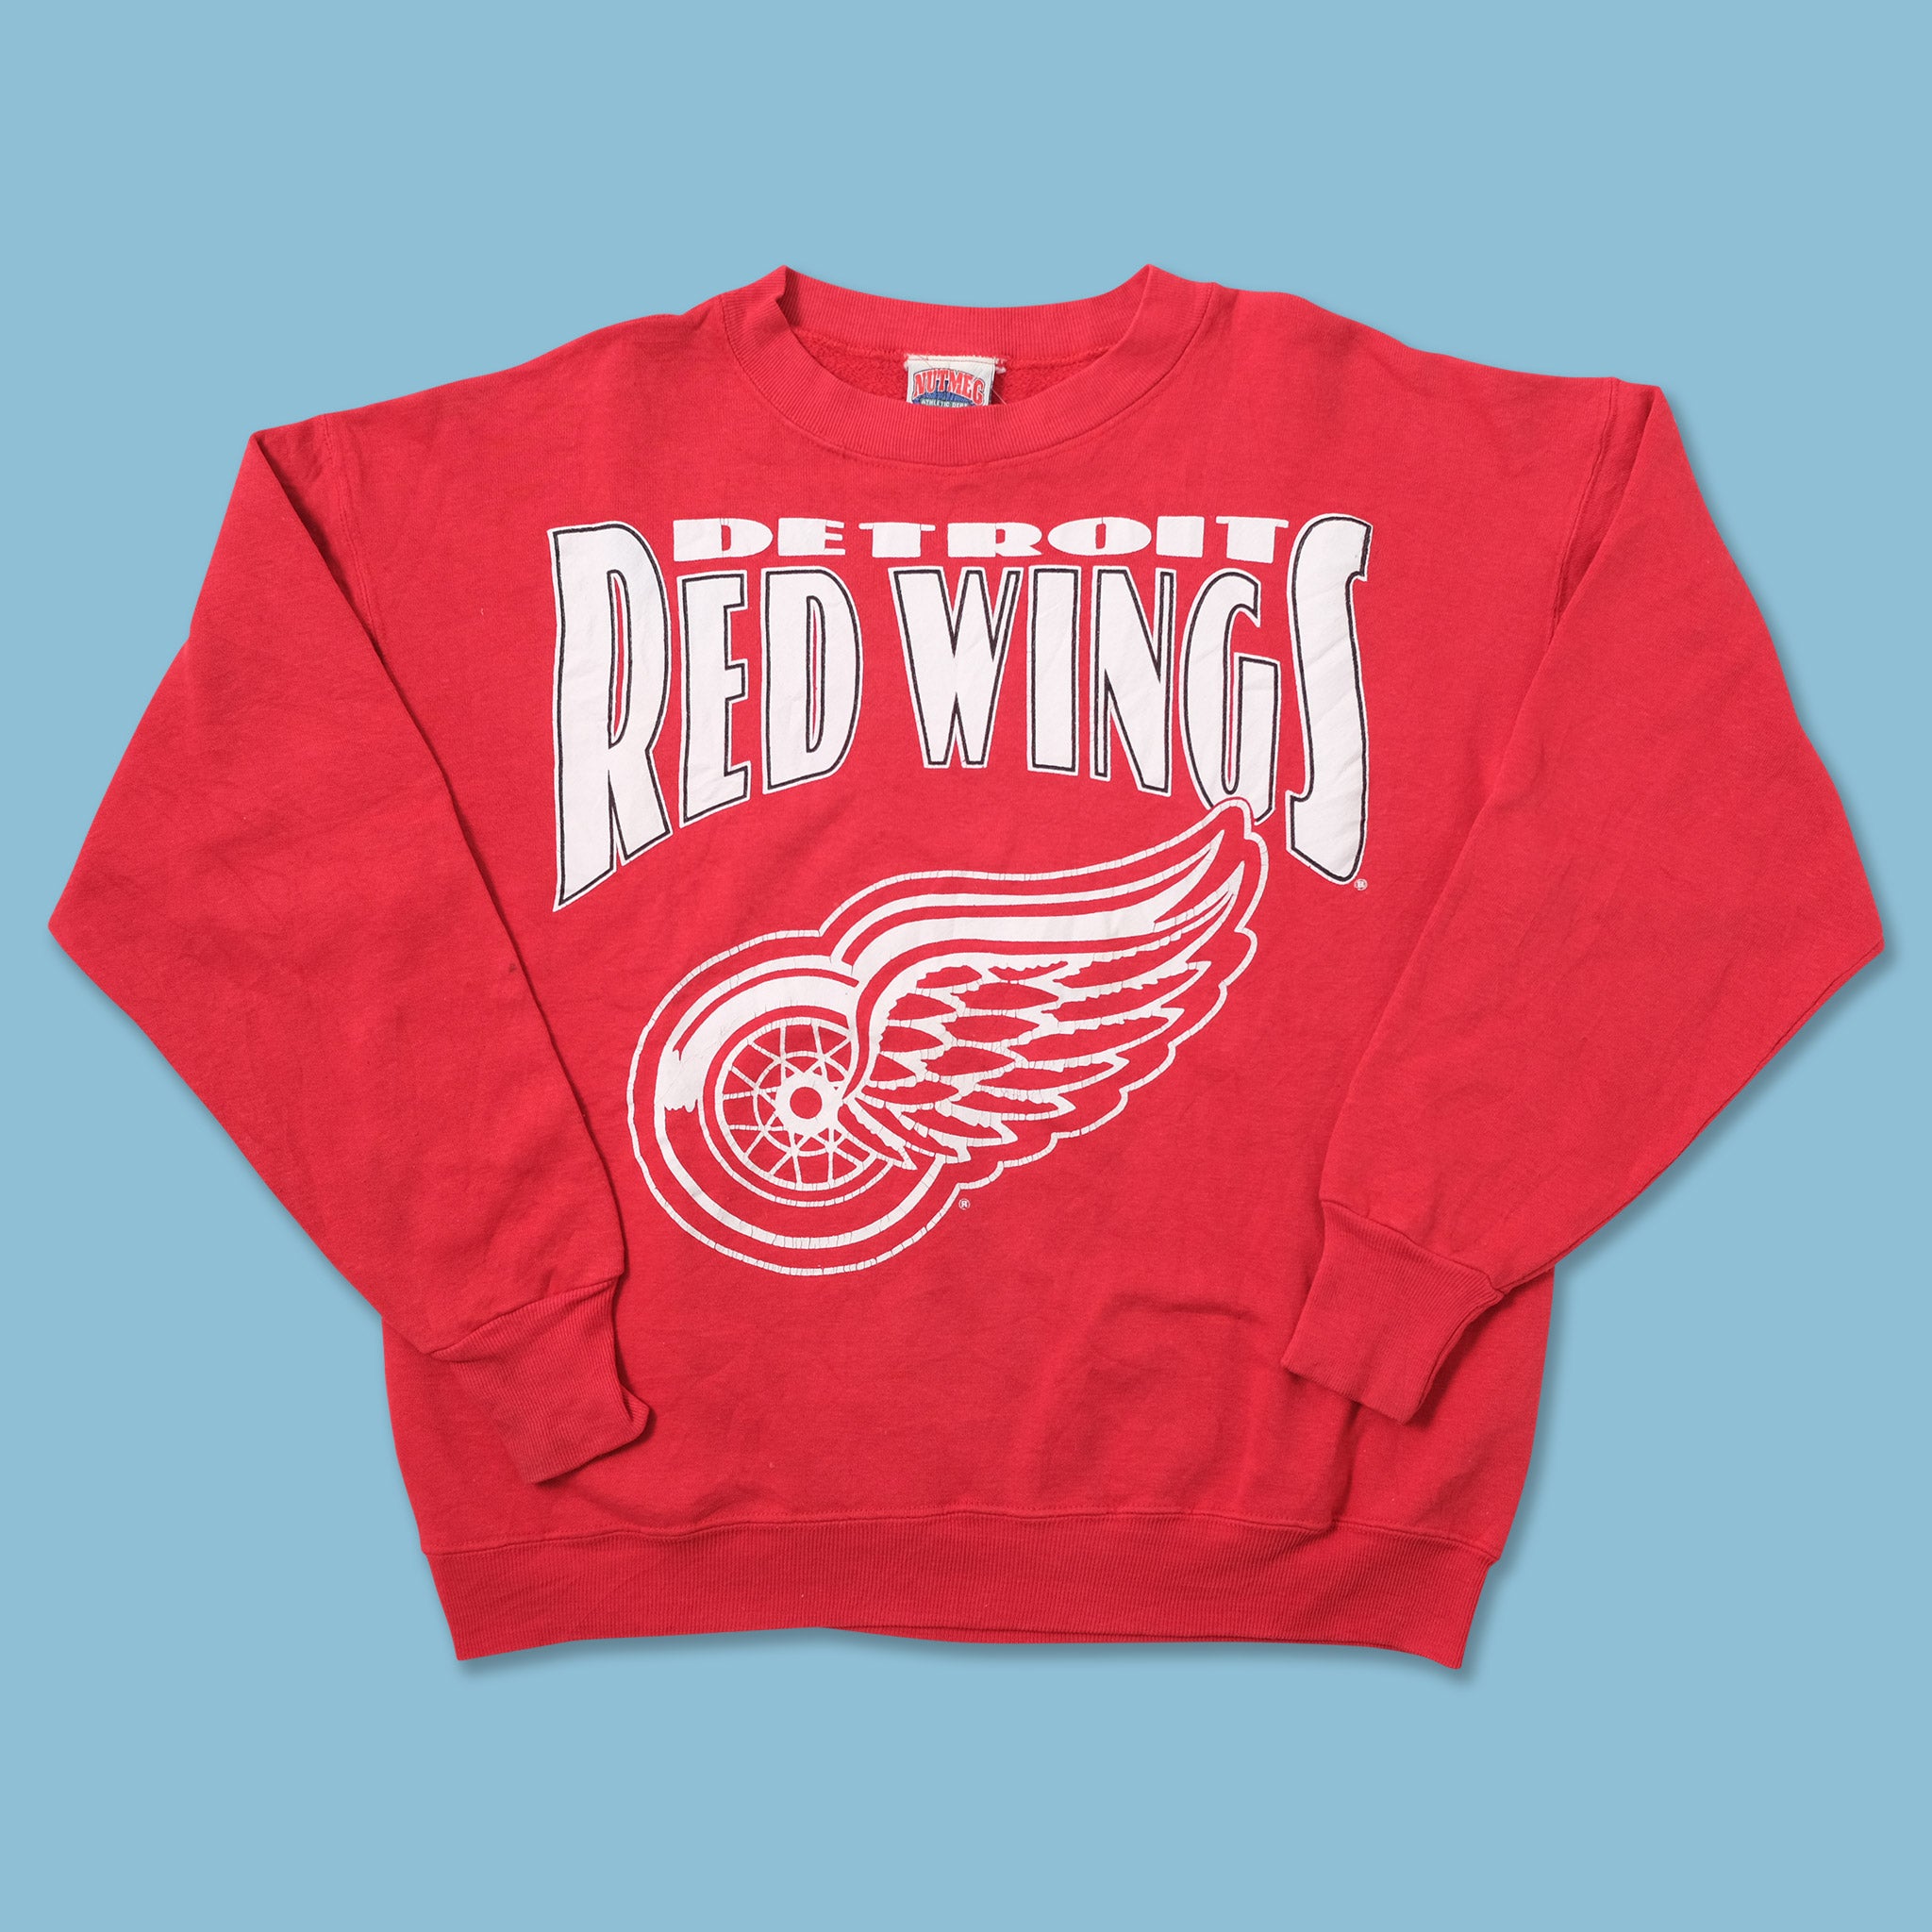 Detroit Red Wings Women's Size Medium Knit Sweater A1 3699